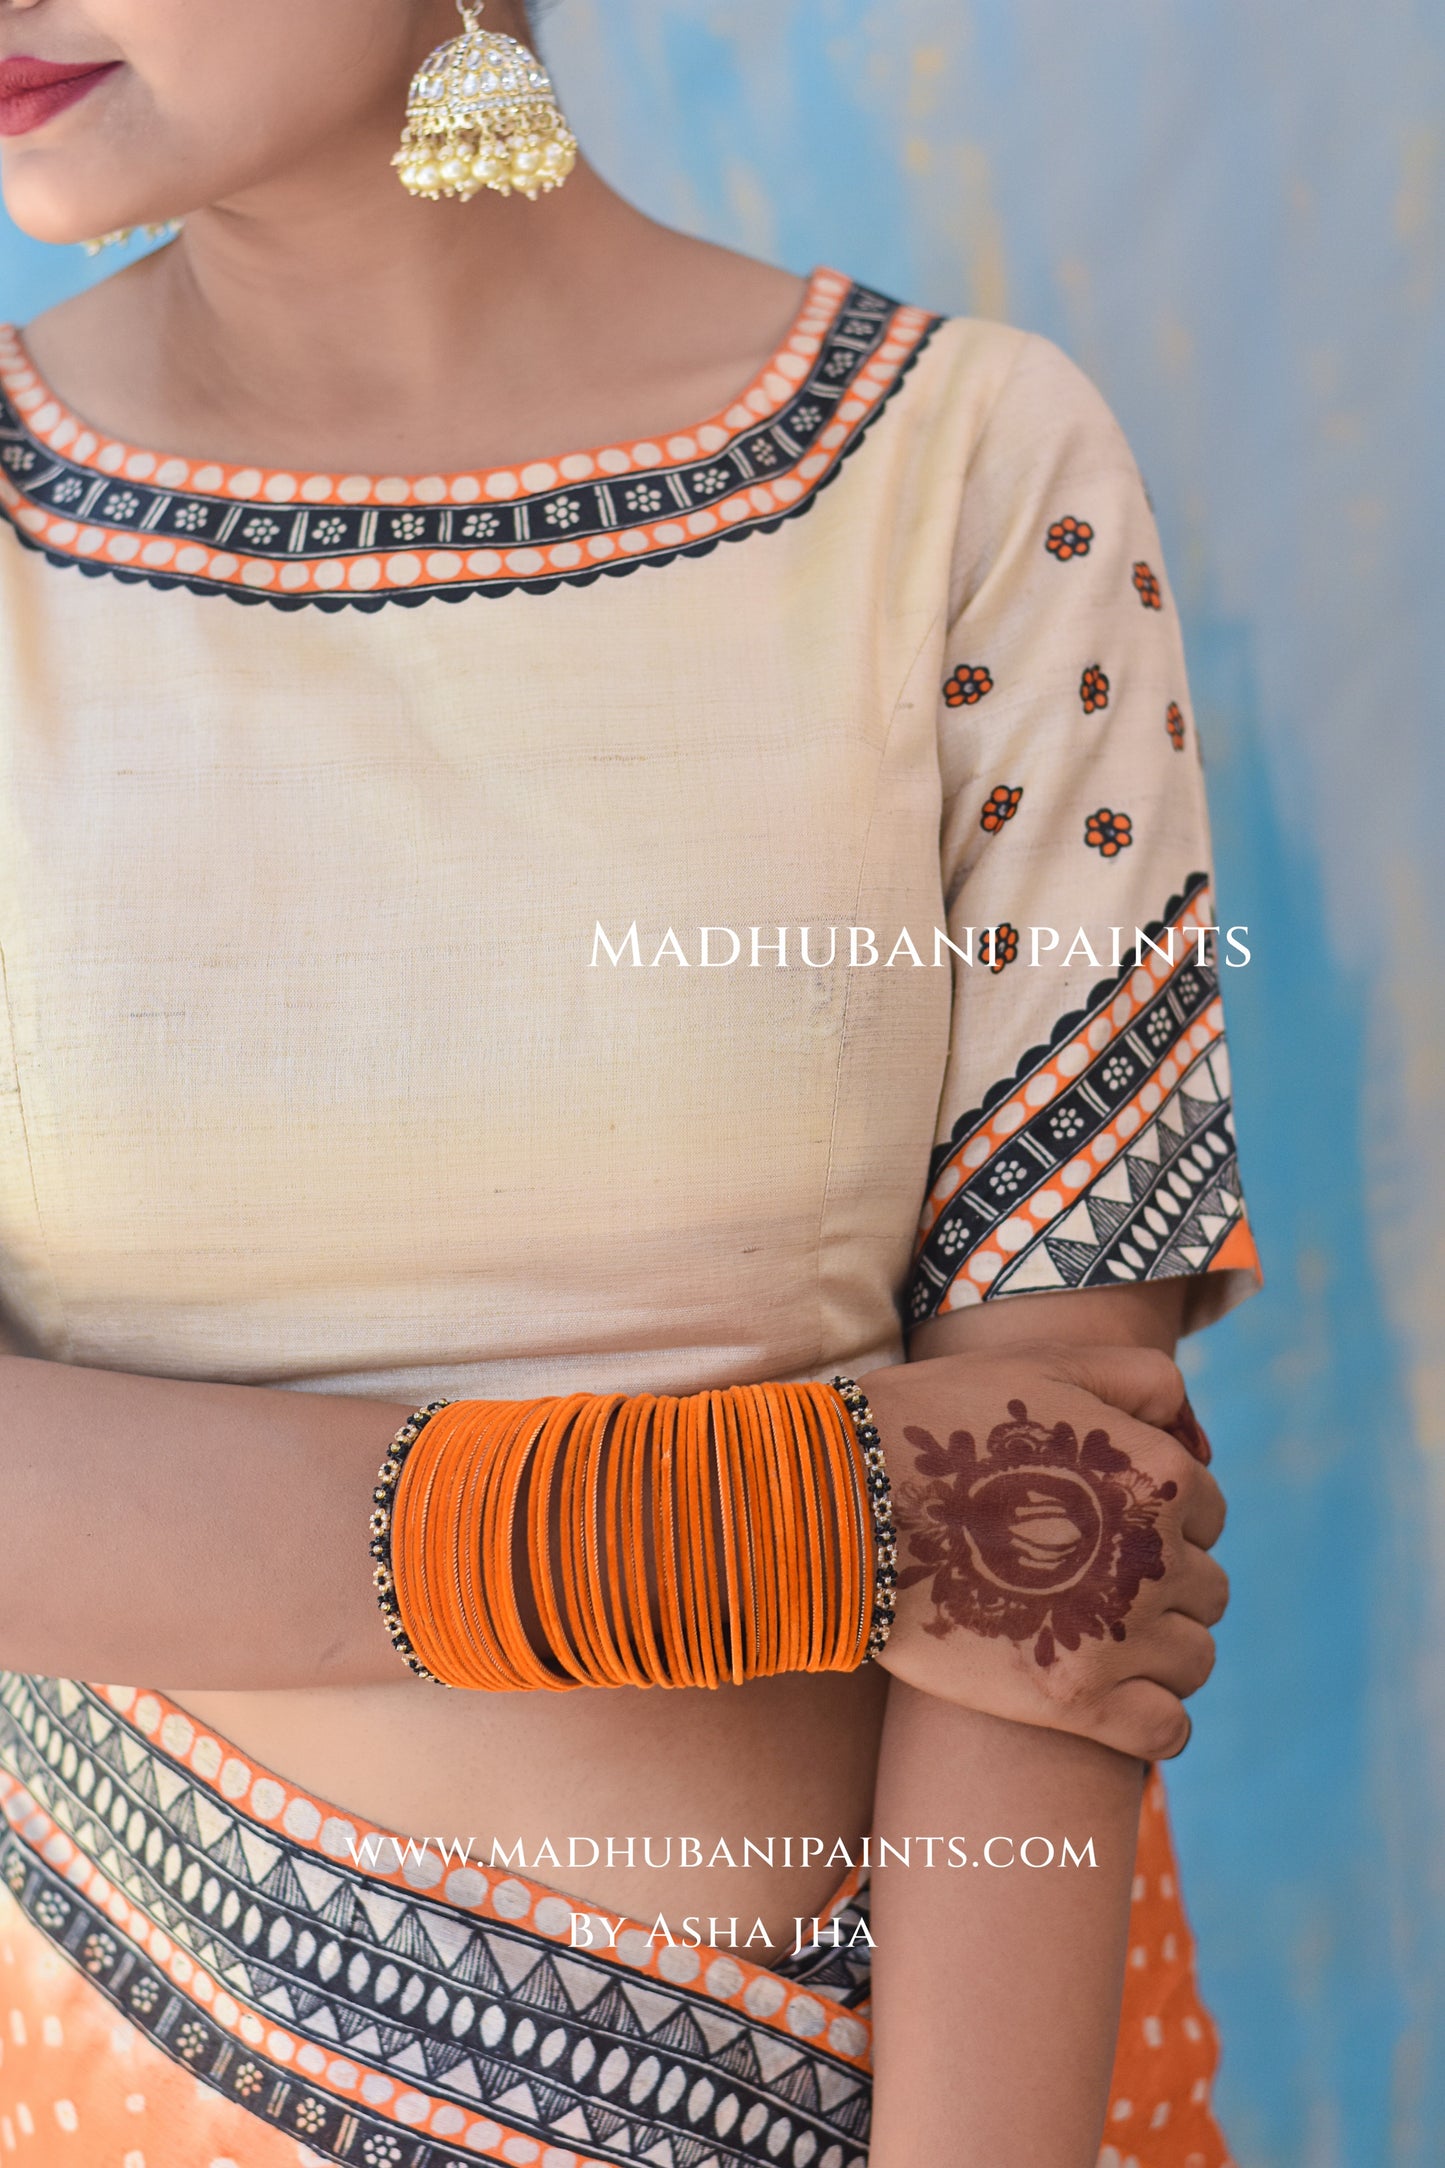 KAMLAKSHI Hand-painted Madhubani Bandhini Tussar Silk Blouse